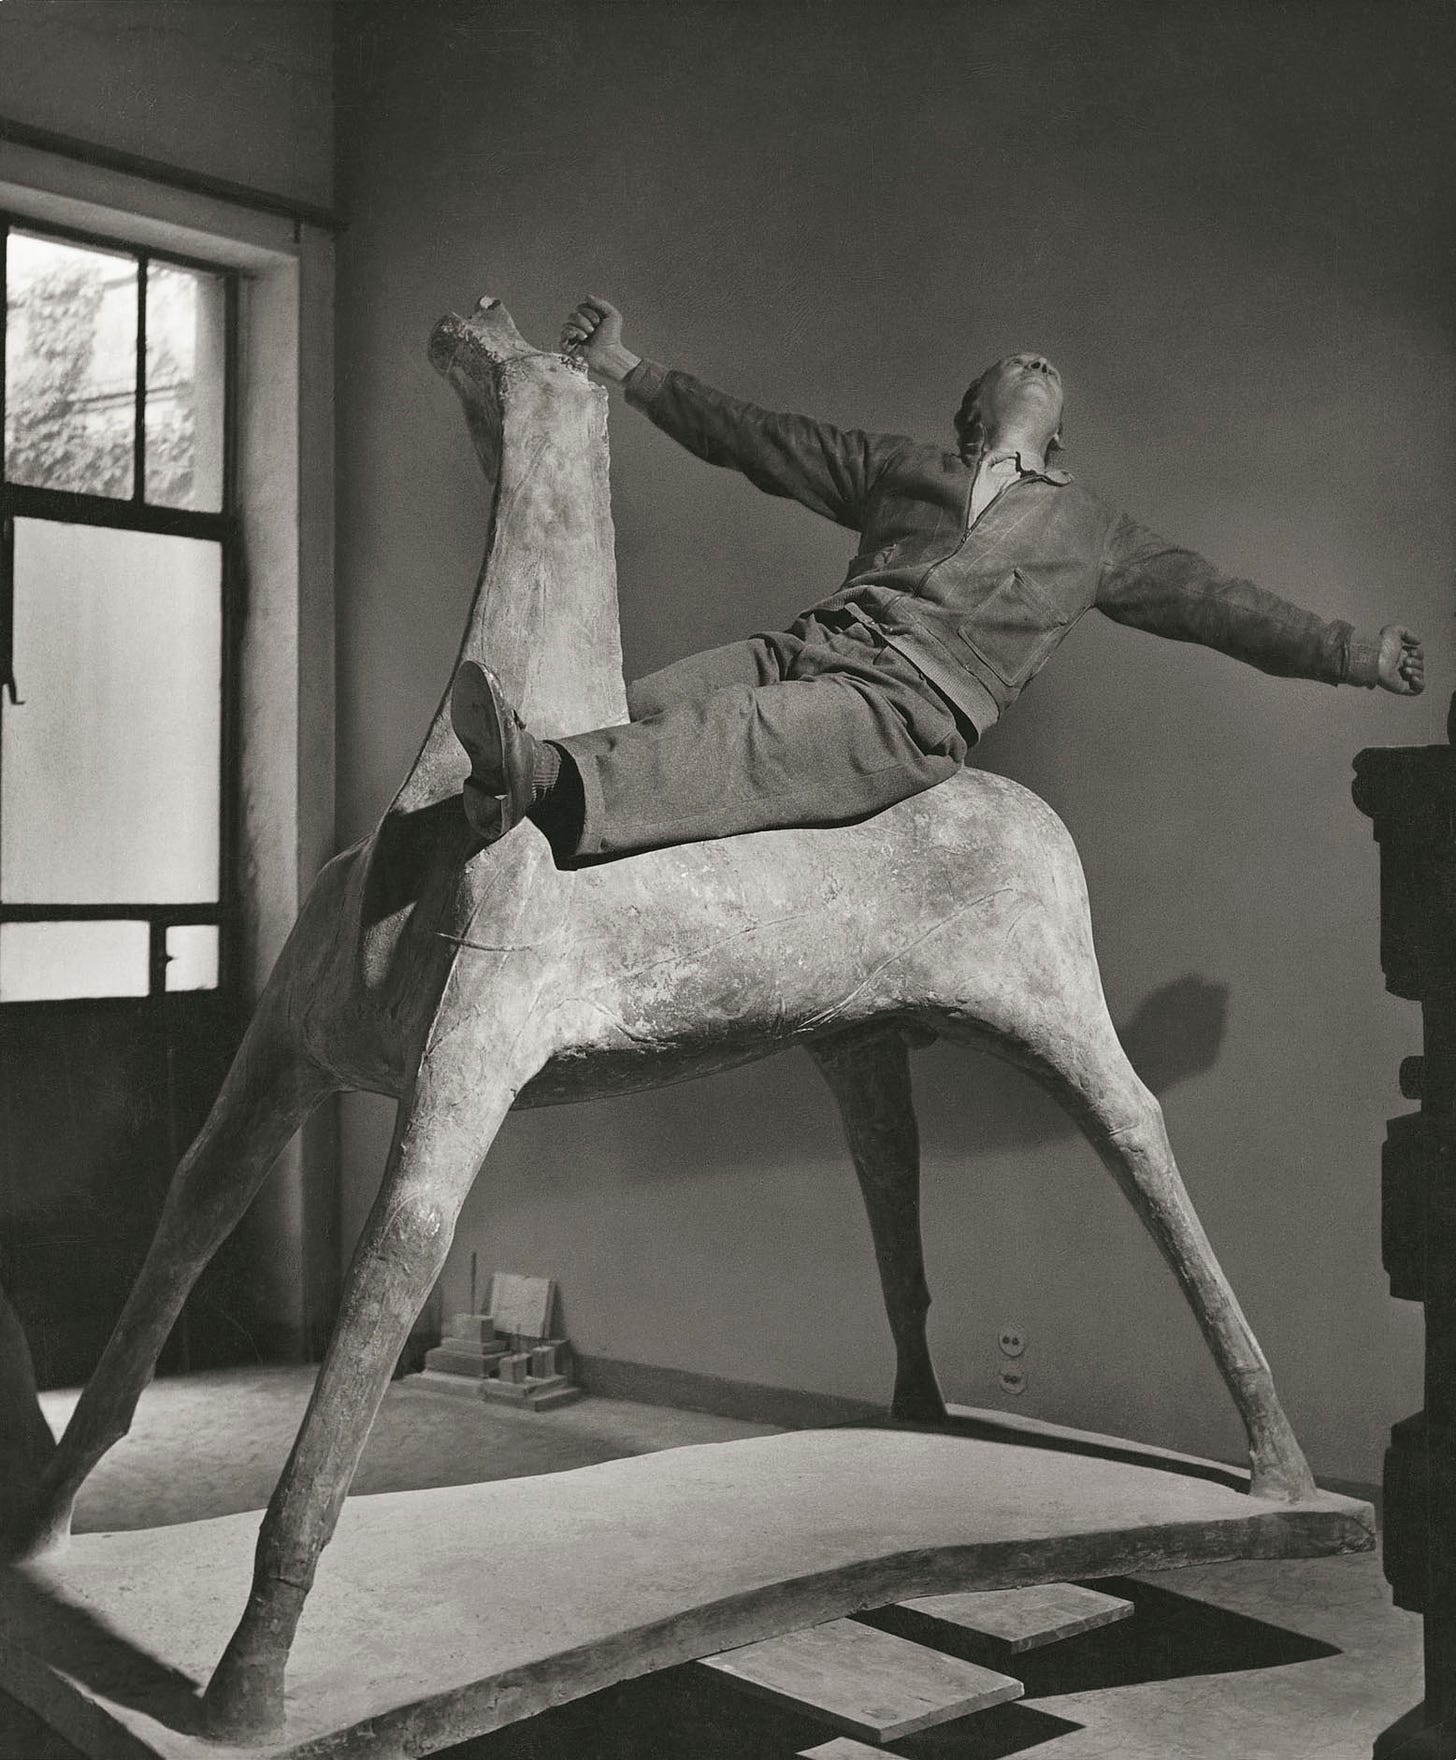 Herbert List, Il cavaliere – The sculptor Marino Marini on his horse, Milan, Italy, 1952 © Herbert List / Magnum Photos